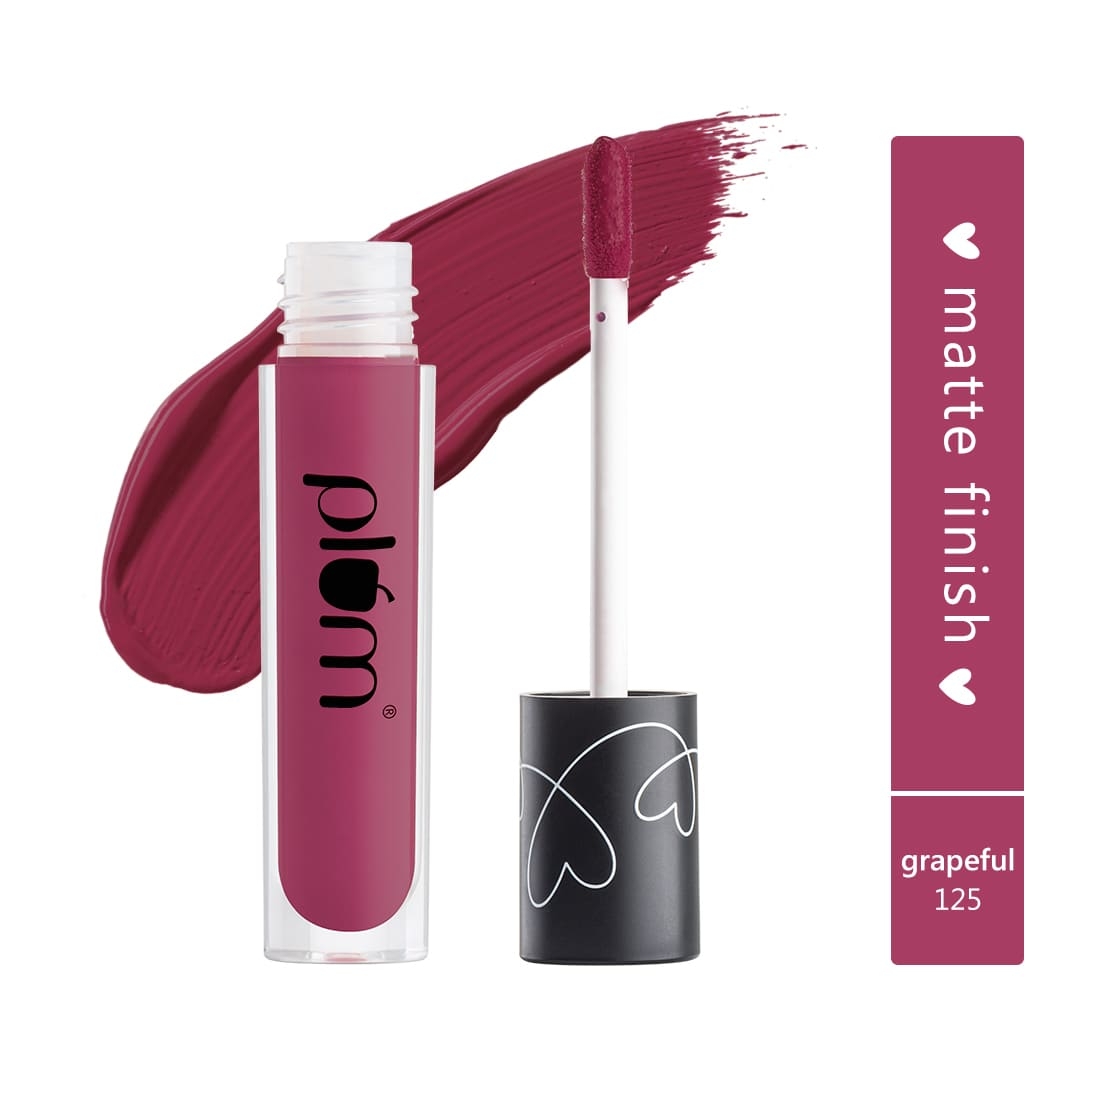 plum | Plum Matte In Heaven Liquid Lipstick | Non-Drying | Smudge-Proof | 100% Vegan & Cruelty Free | Grapeful - 125